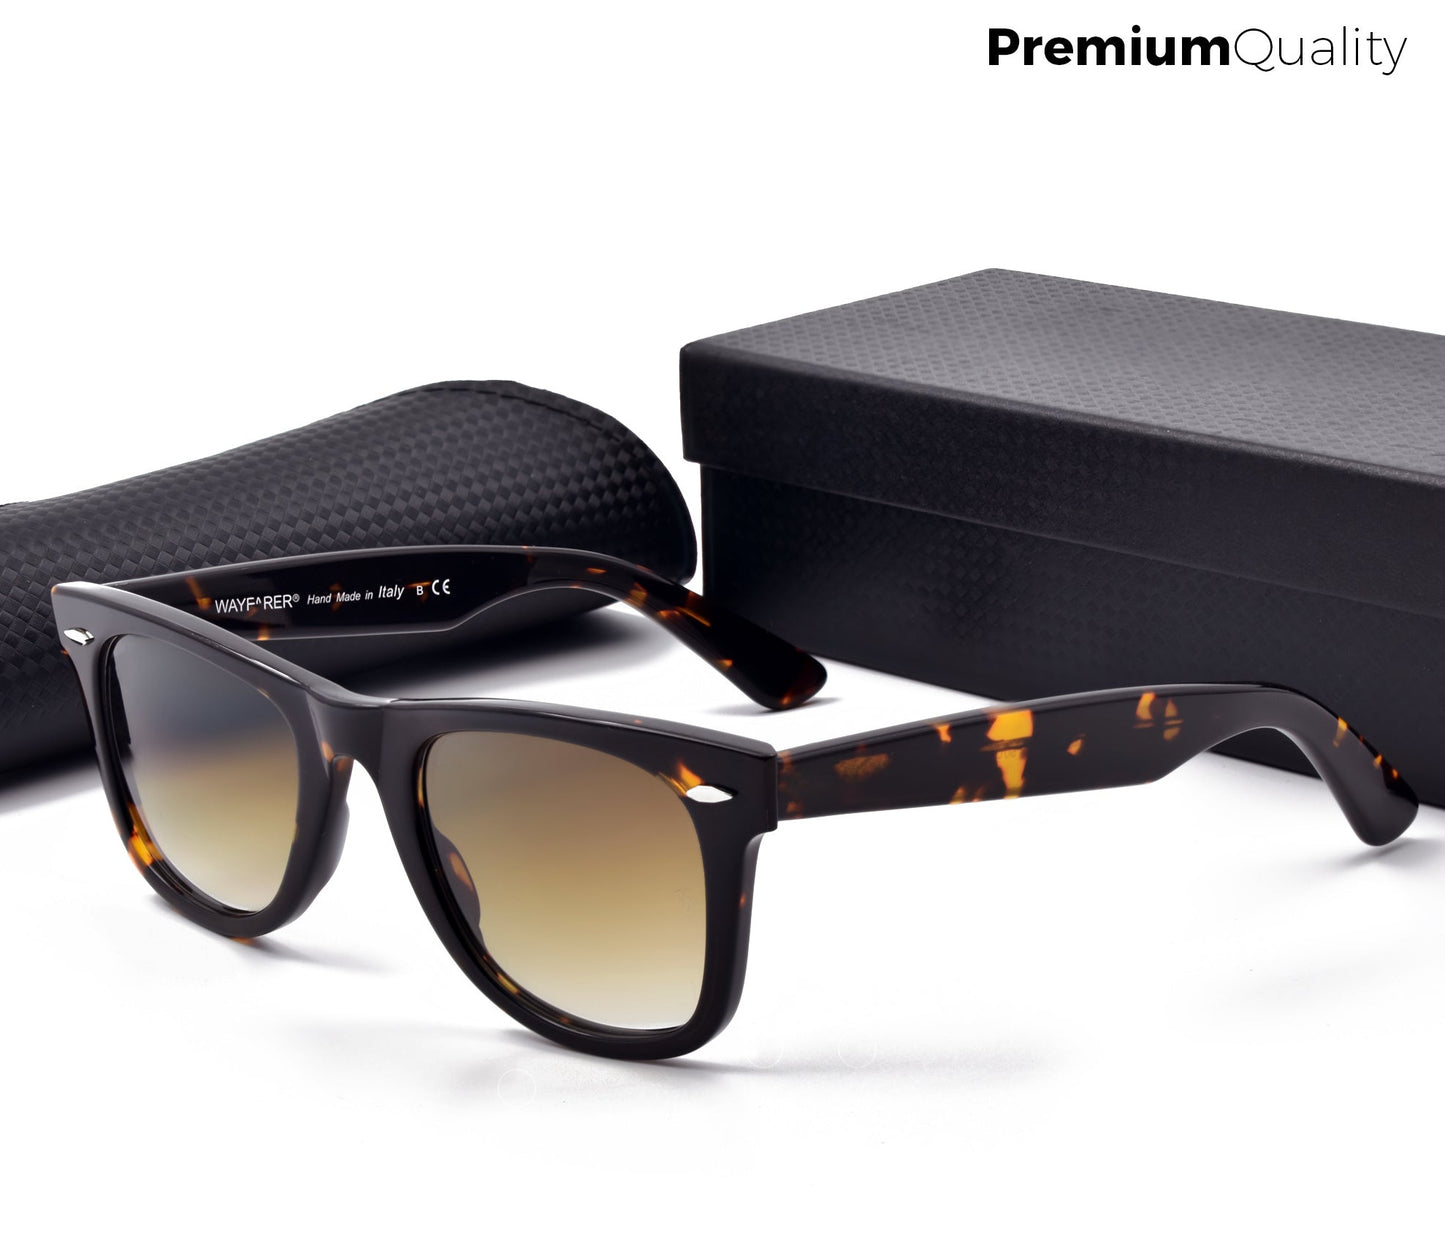 Stylish Premium Quality Wayfarer Shape Sunglass for Men | RB 150